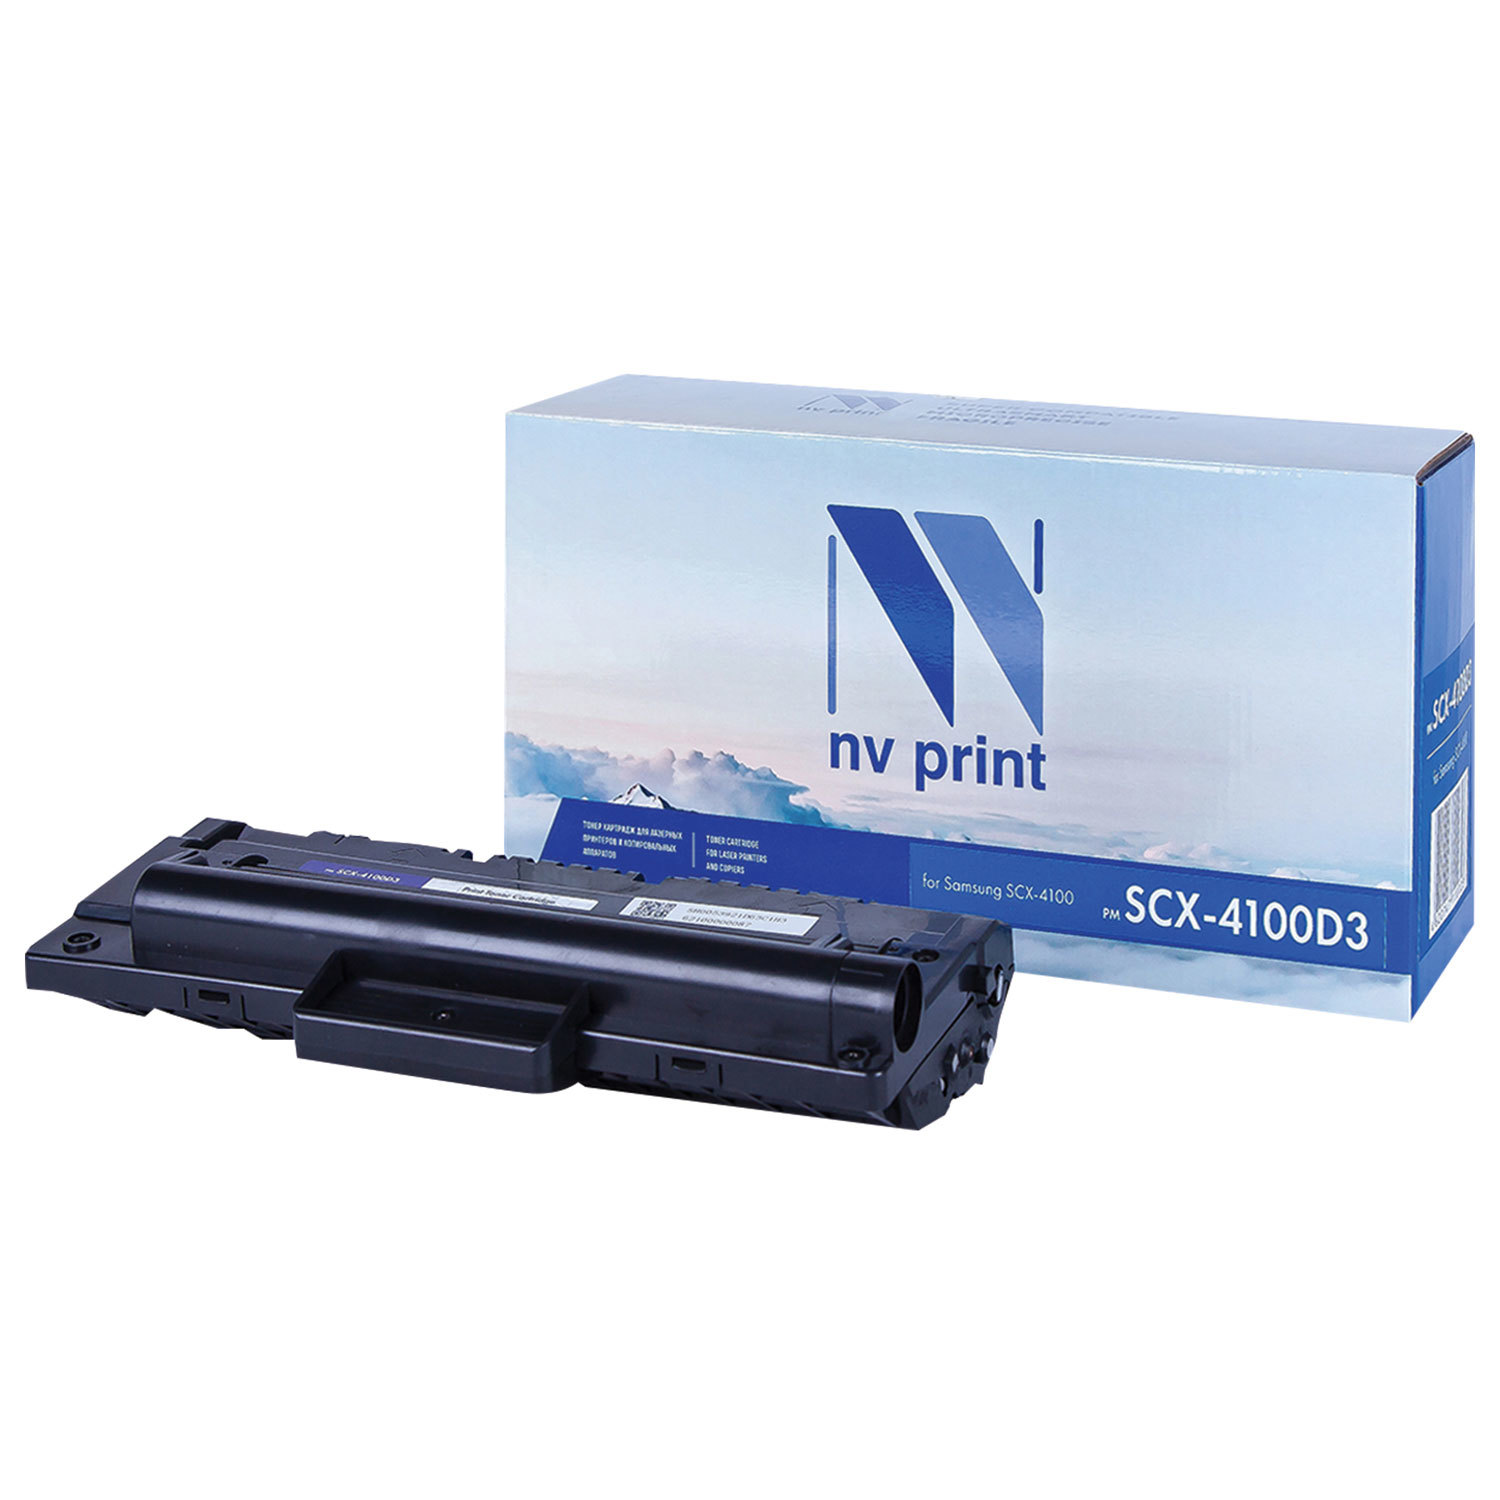 NV PRINT  NV PRINT NV-SCX-4100D3